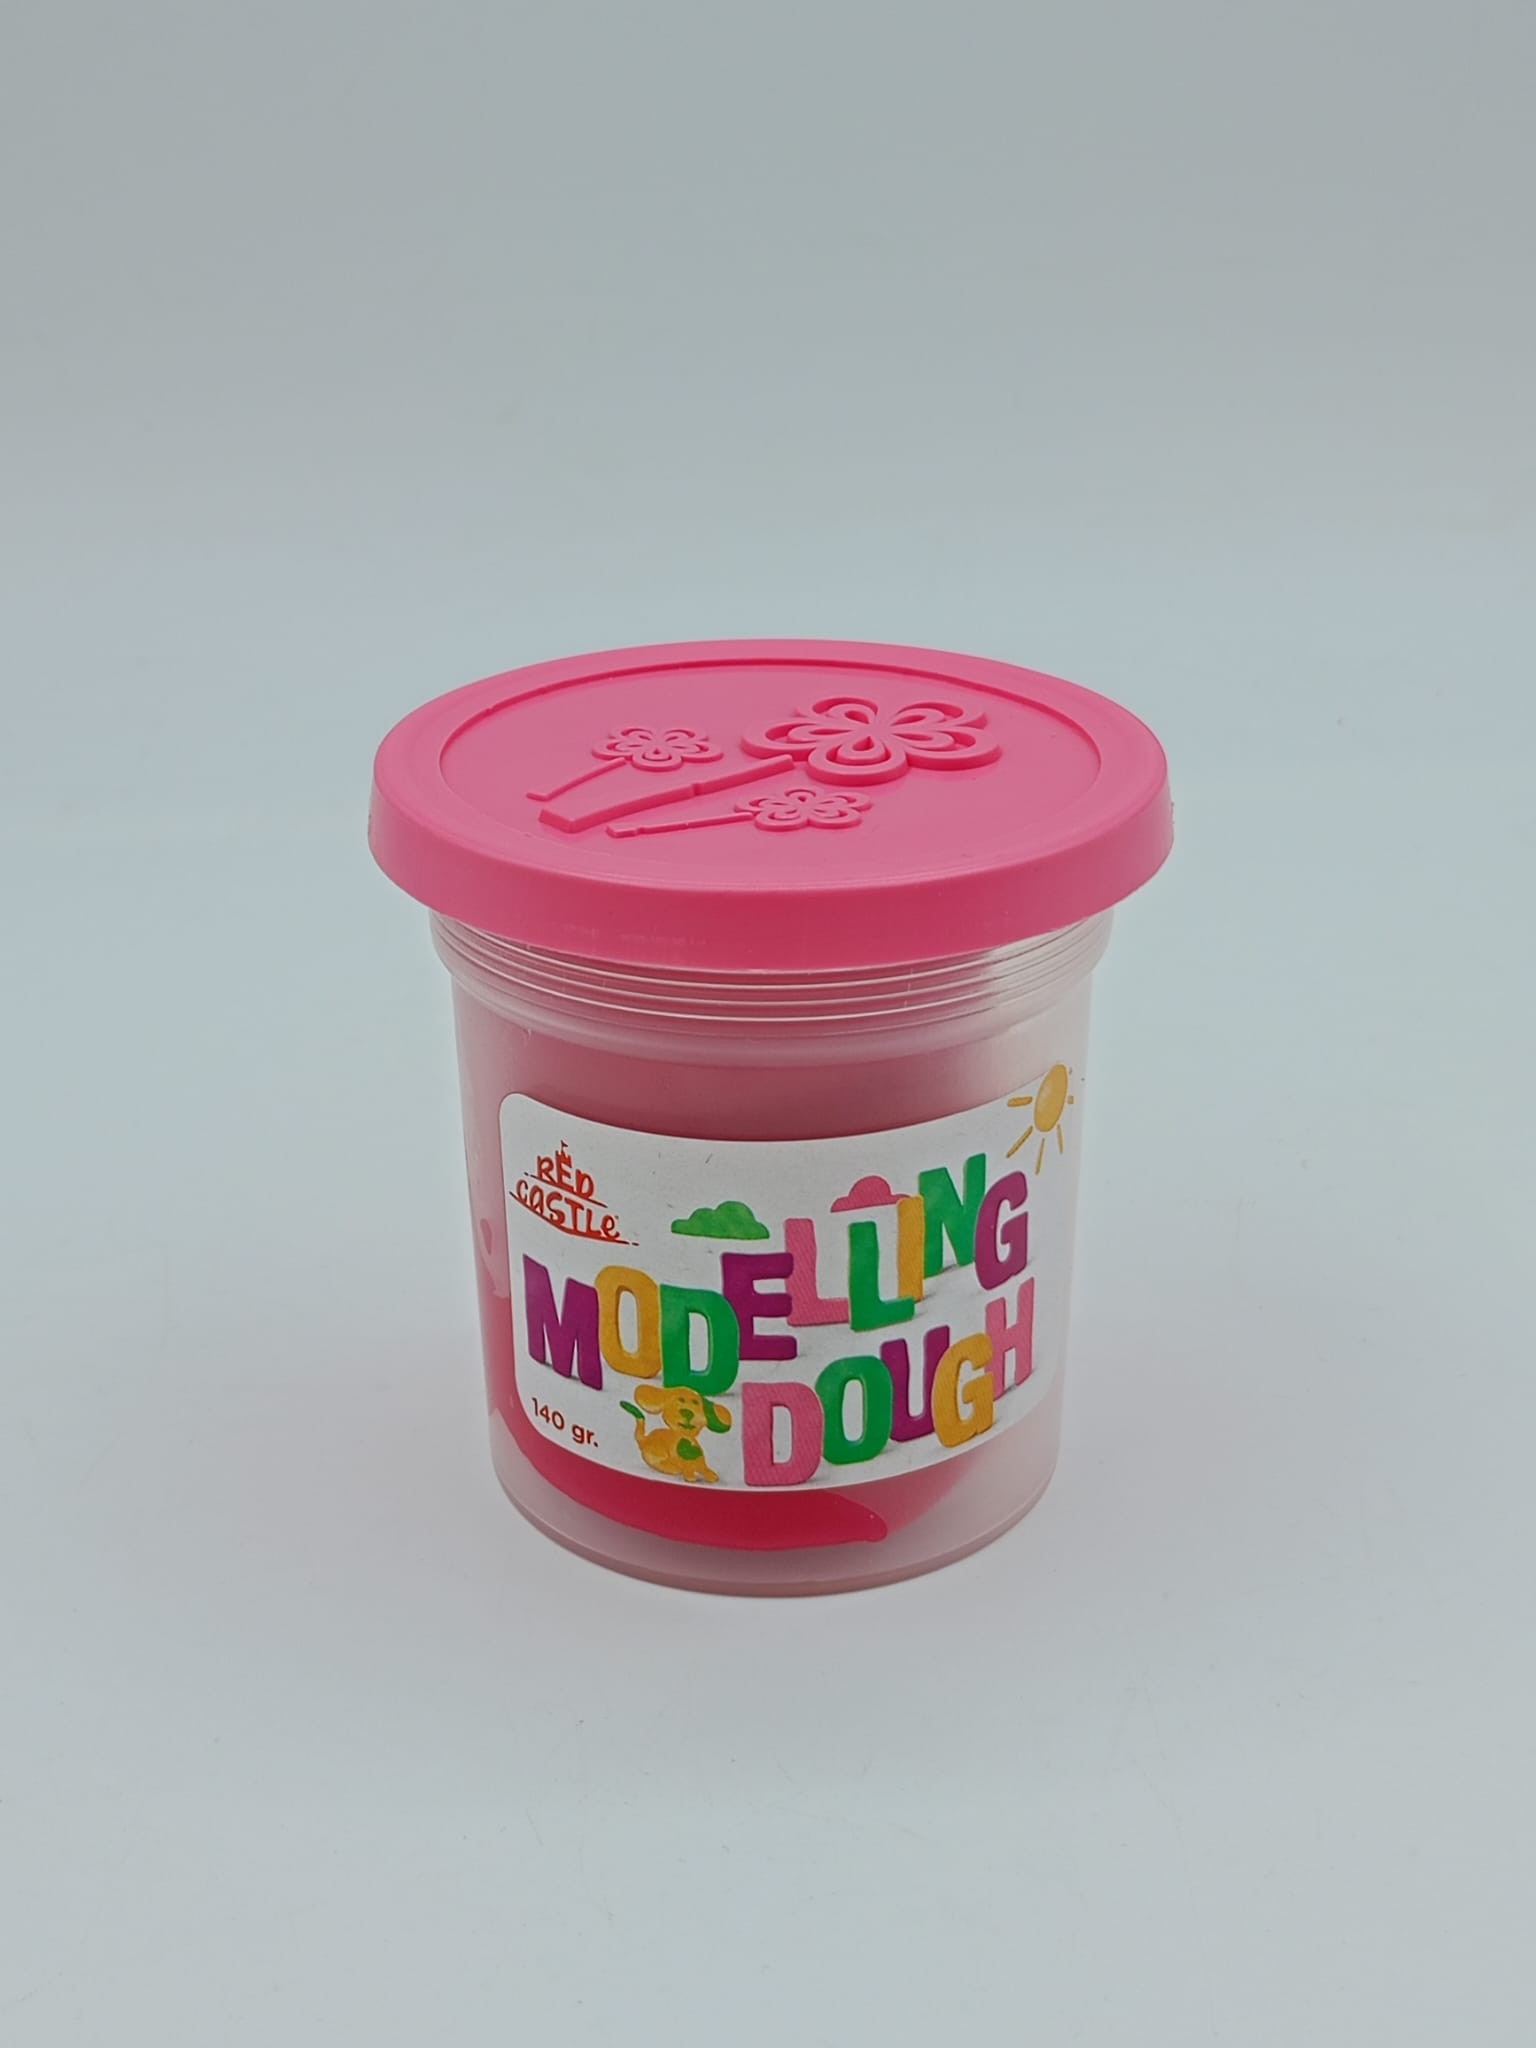 Modeling Dough 140gr Pink-Redcastle MDG01-05